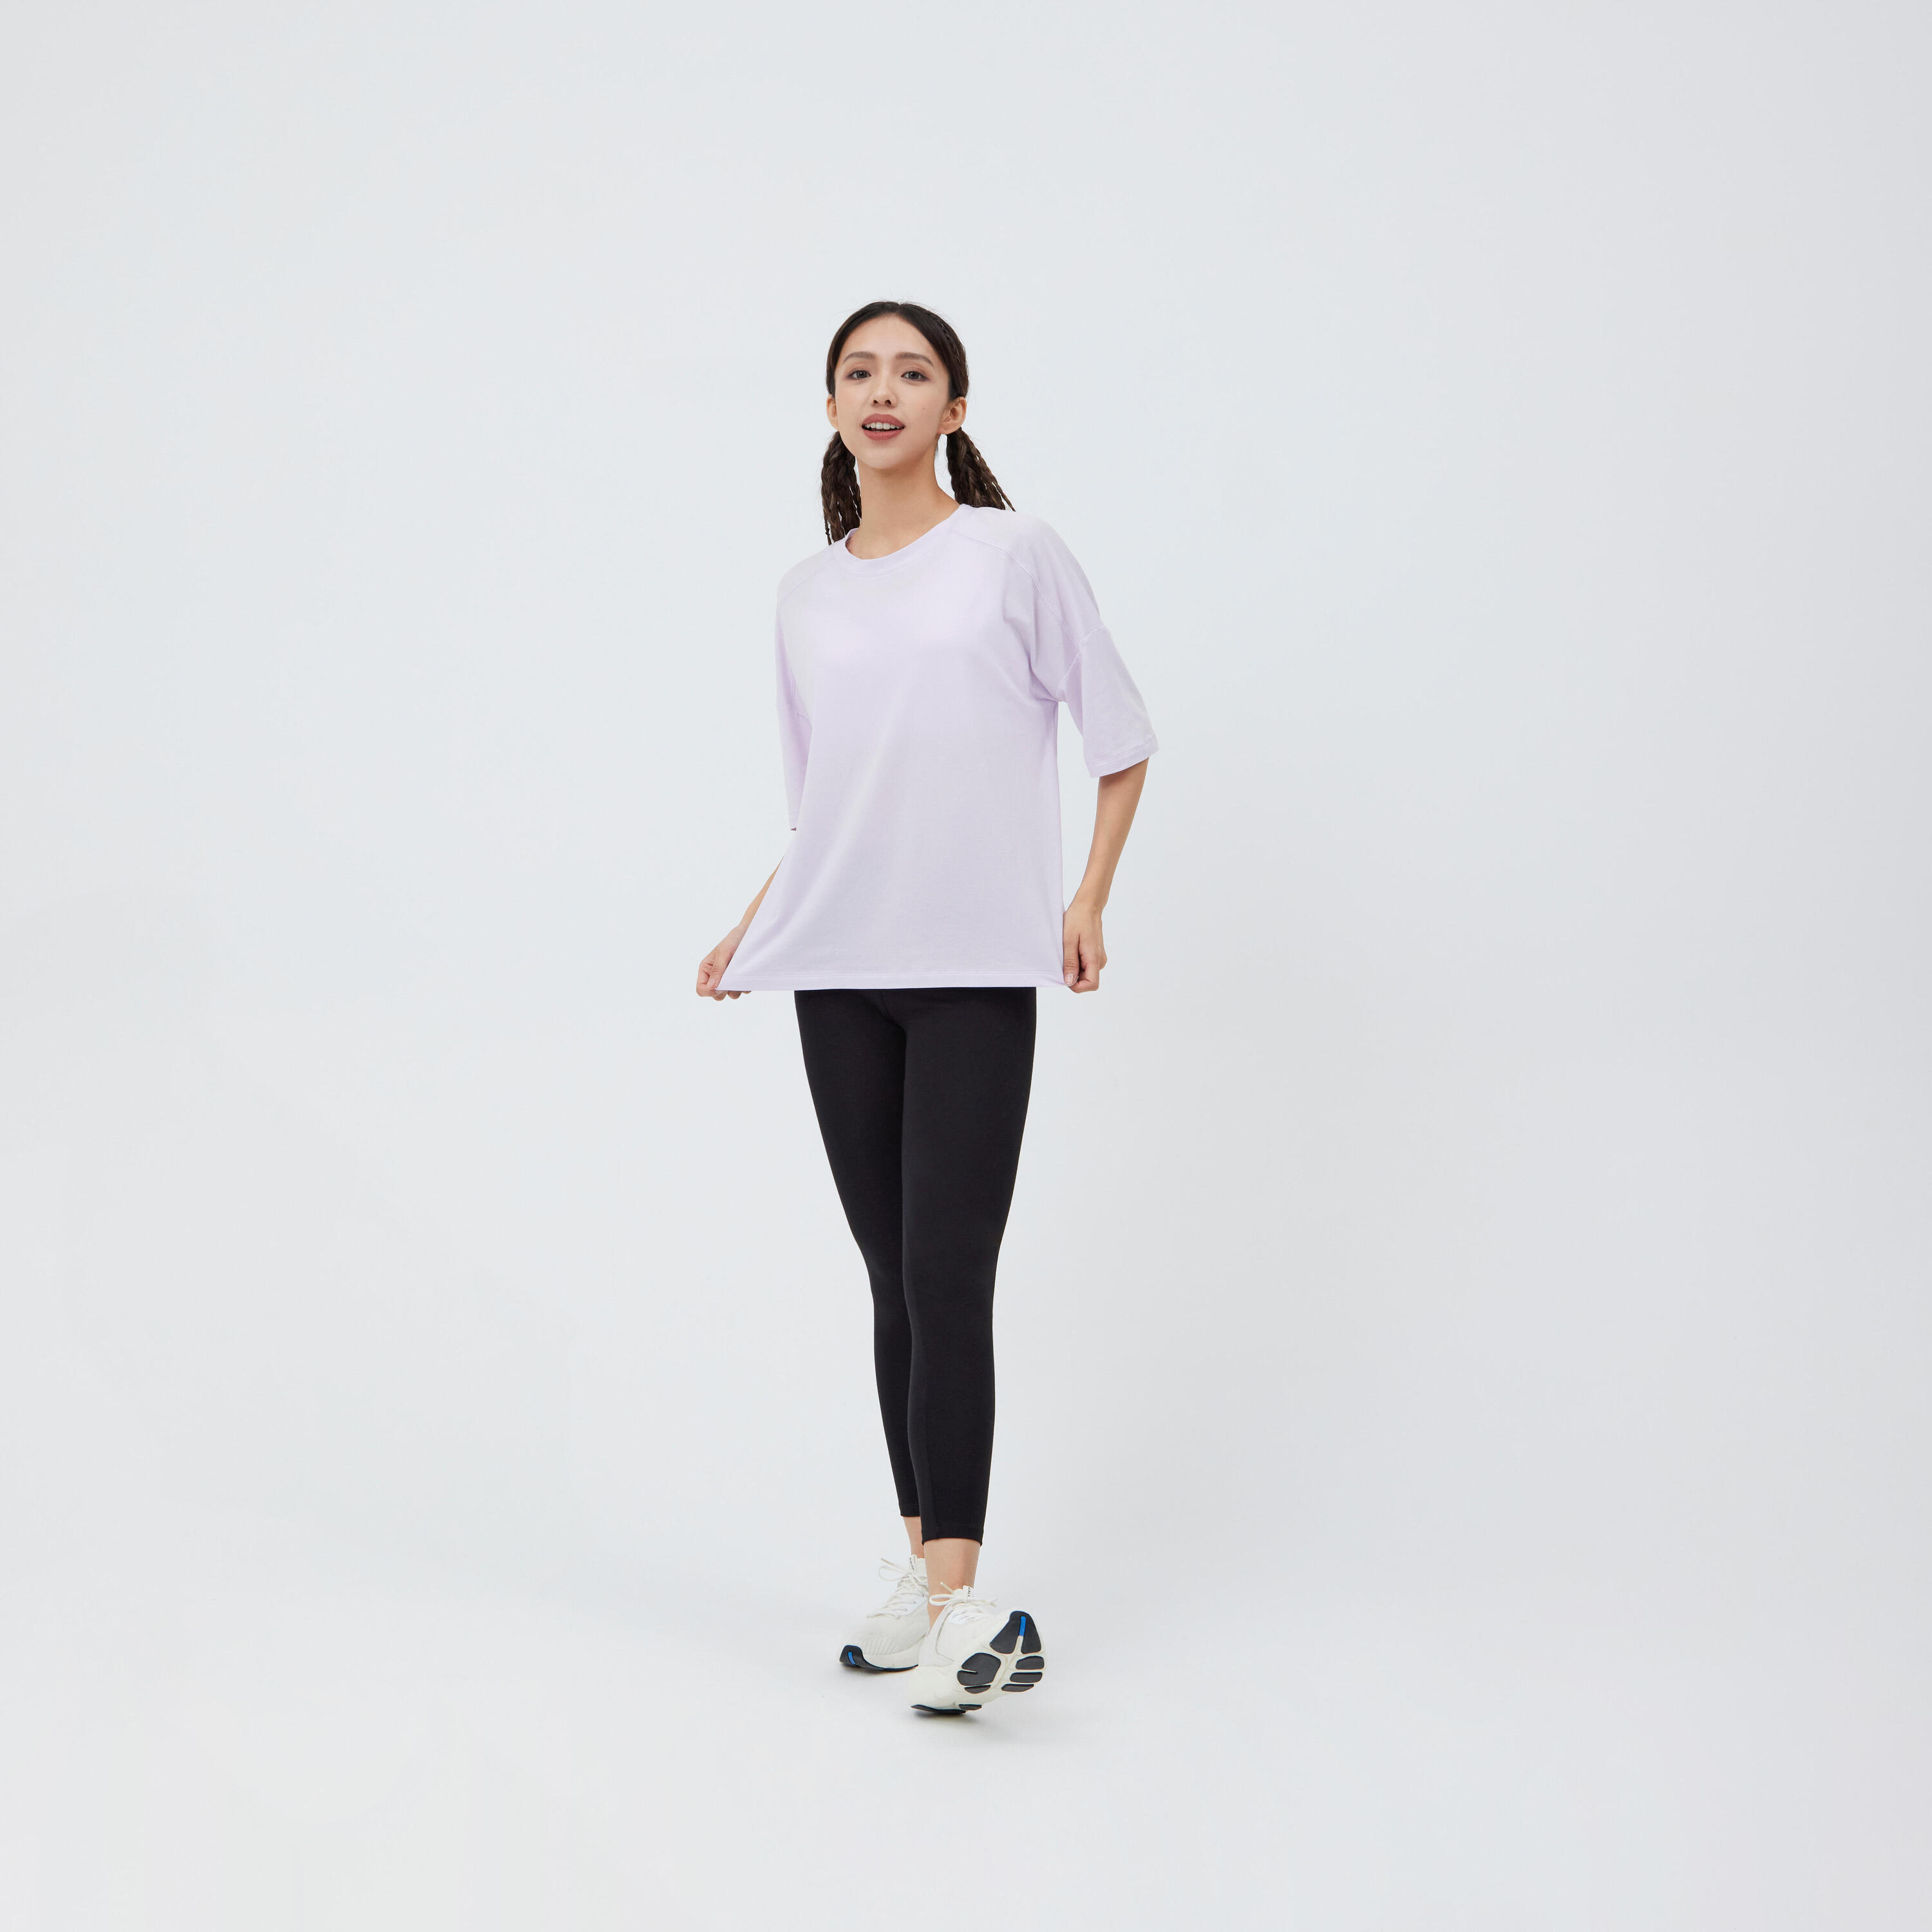 DOMYOS Women's Loose-Fit Fitness T-Shirt 520 - Mauve